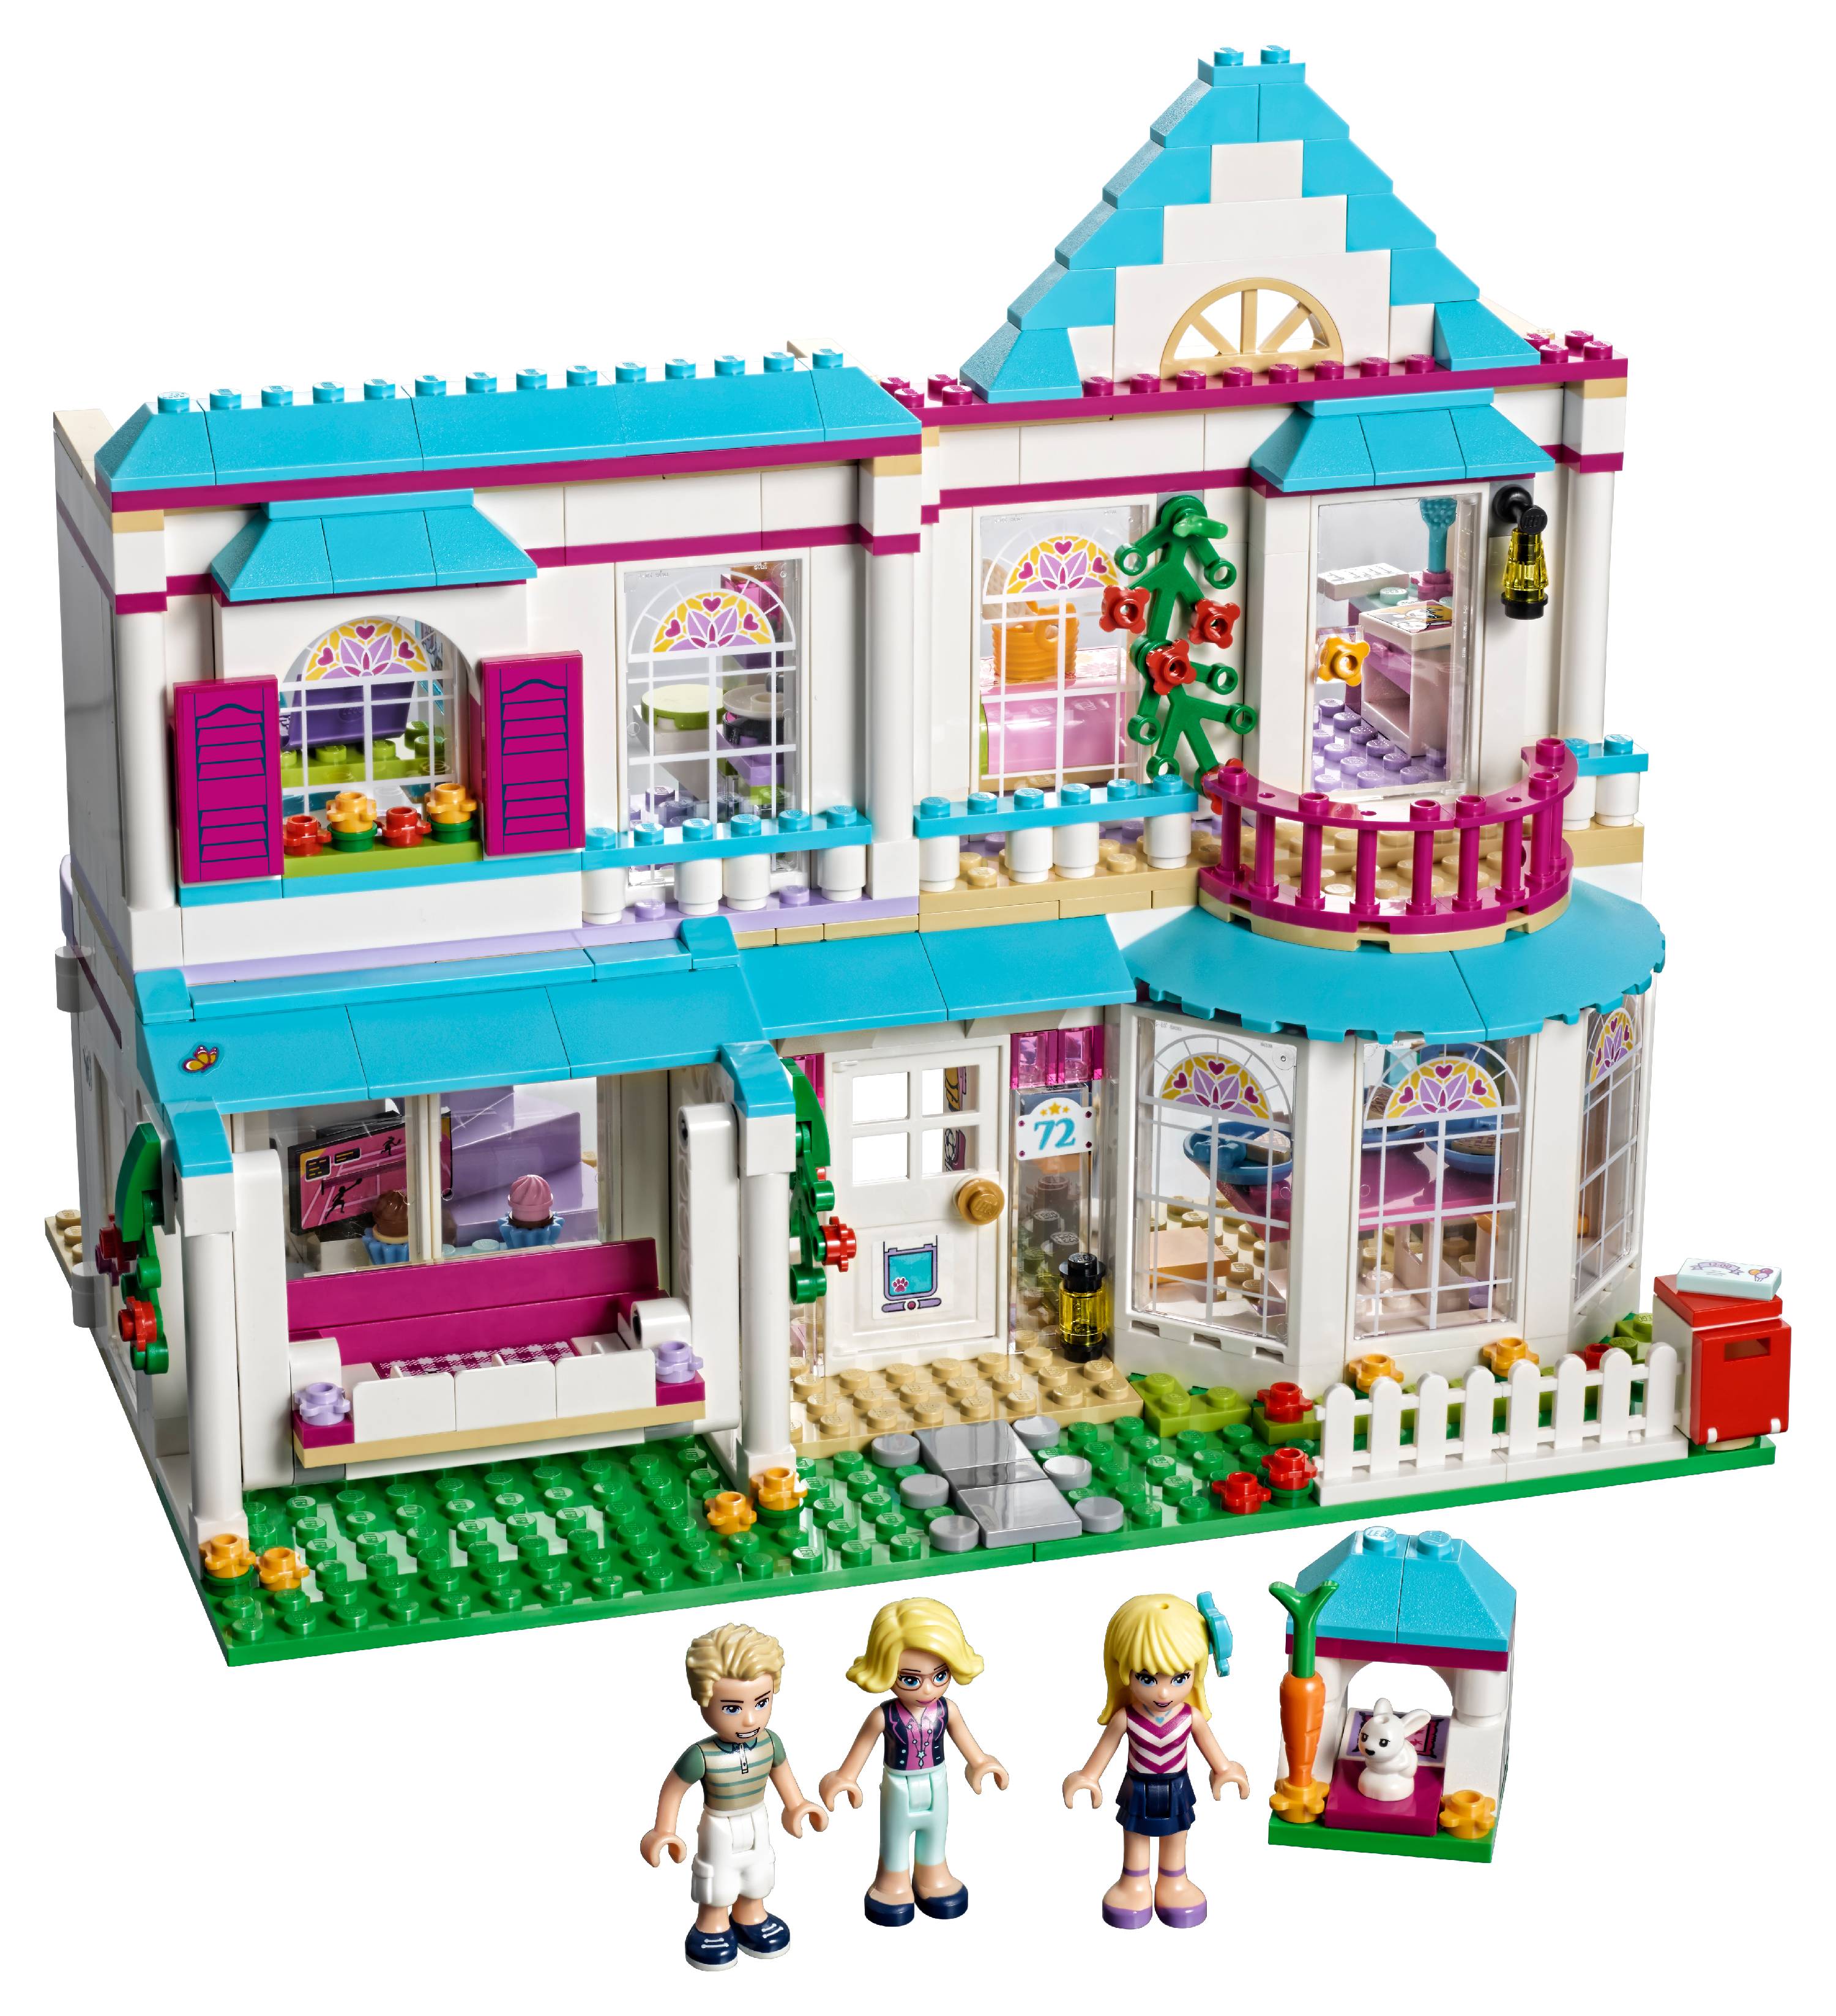 LEGO Friends Stephanie's House 41314 Toy Dollhouse Playset (622 pcs) - image 2 of 6